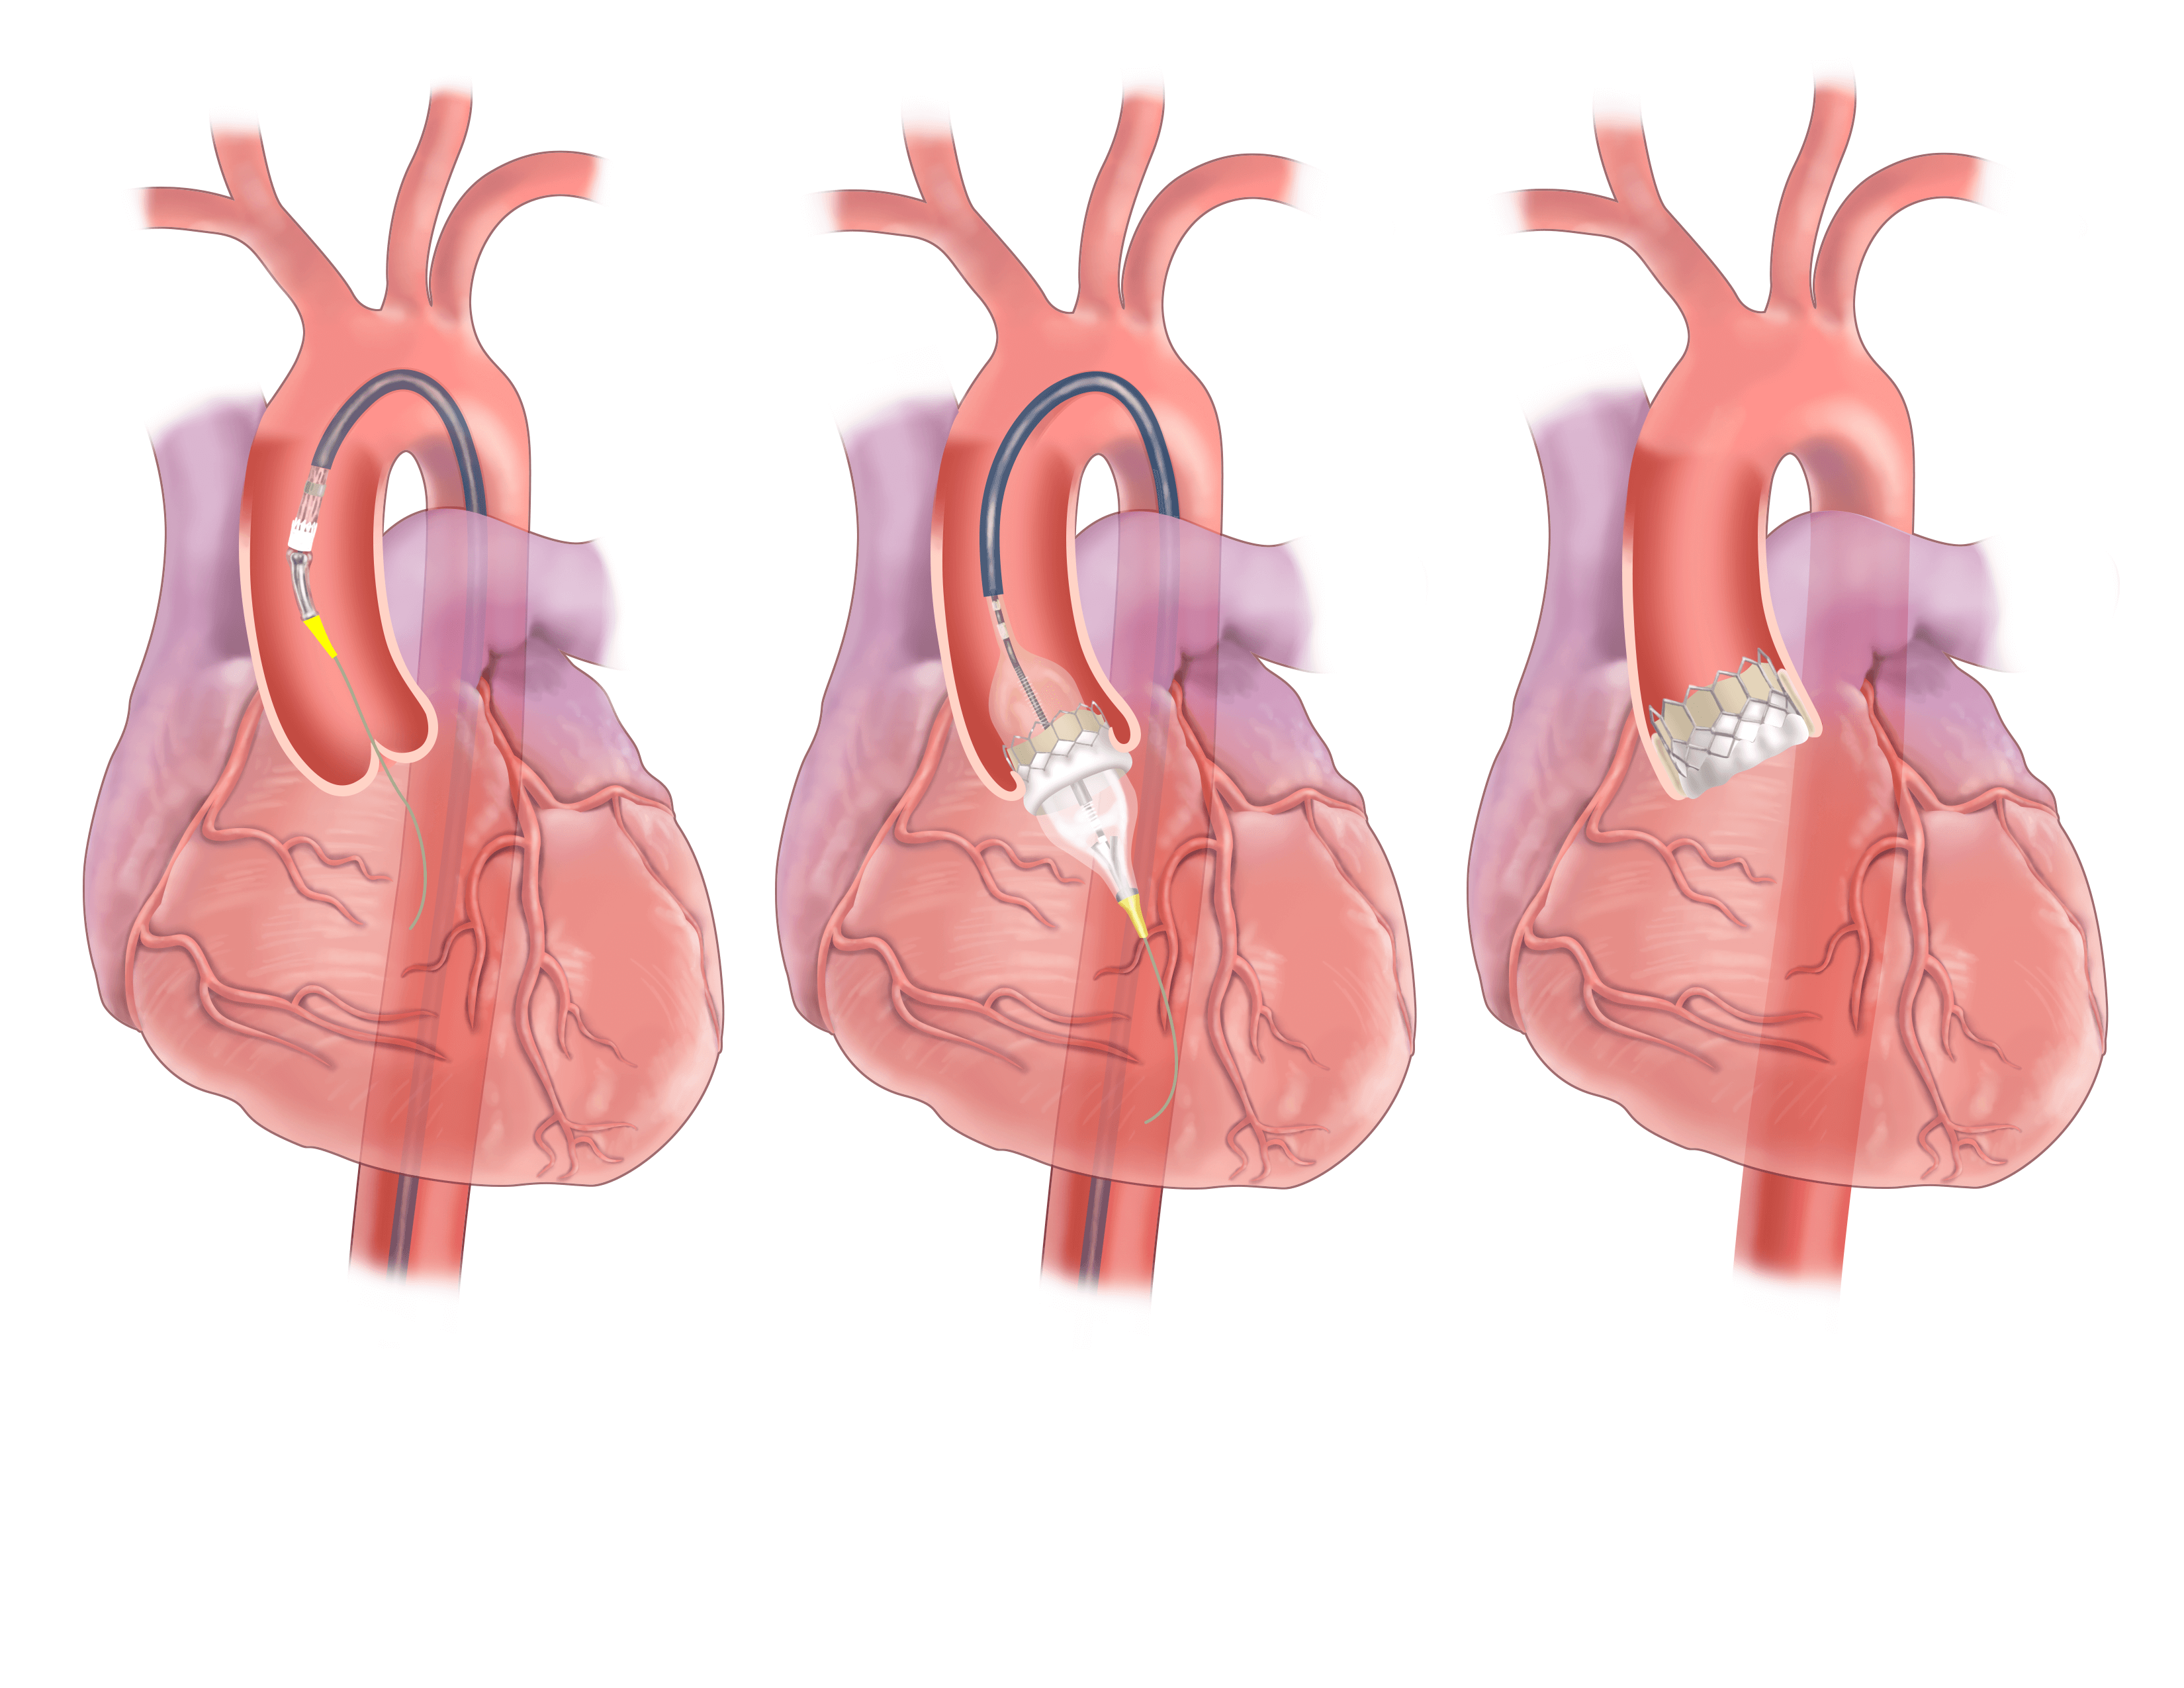 Tavr Procedure Tests And Procedures Upmc Heart And Vascular Institute